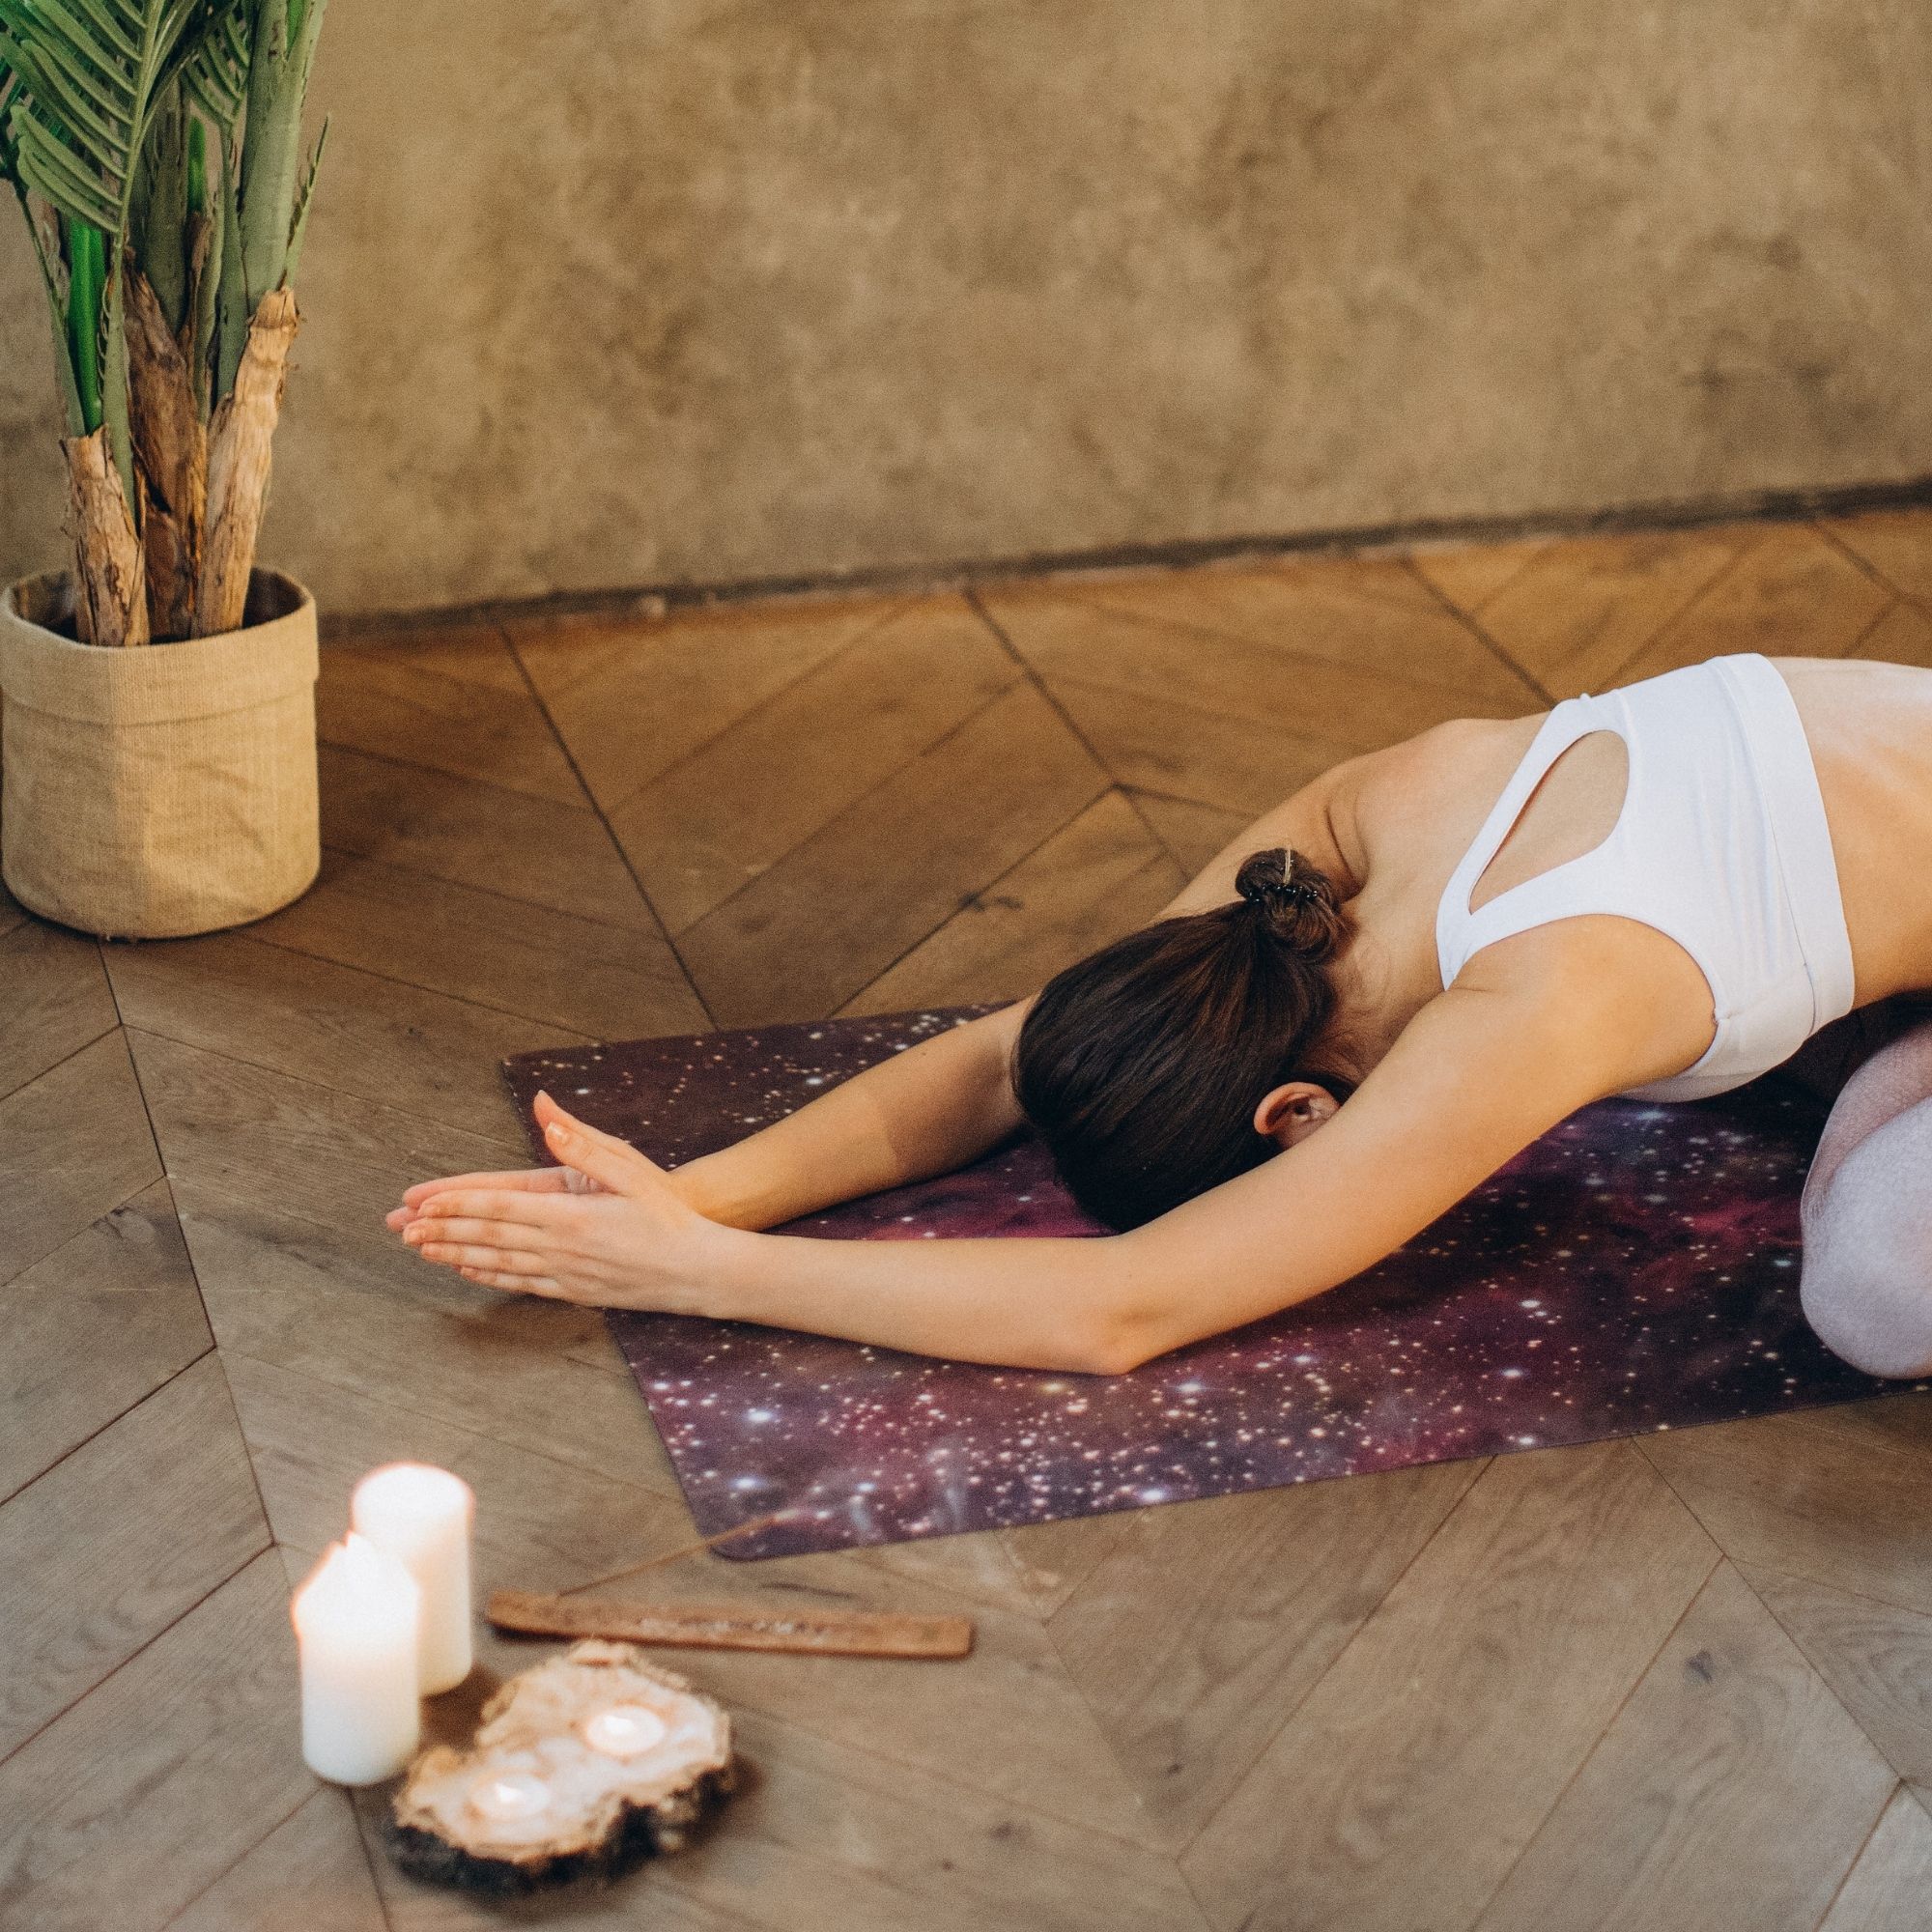 Woman in yoga position meditating